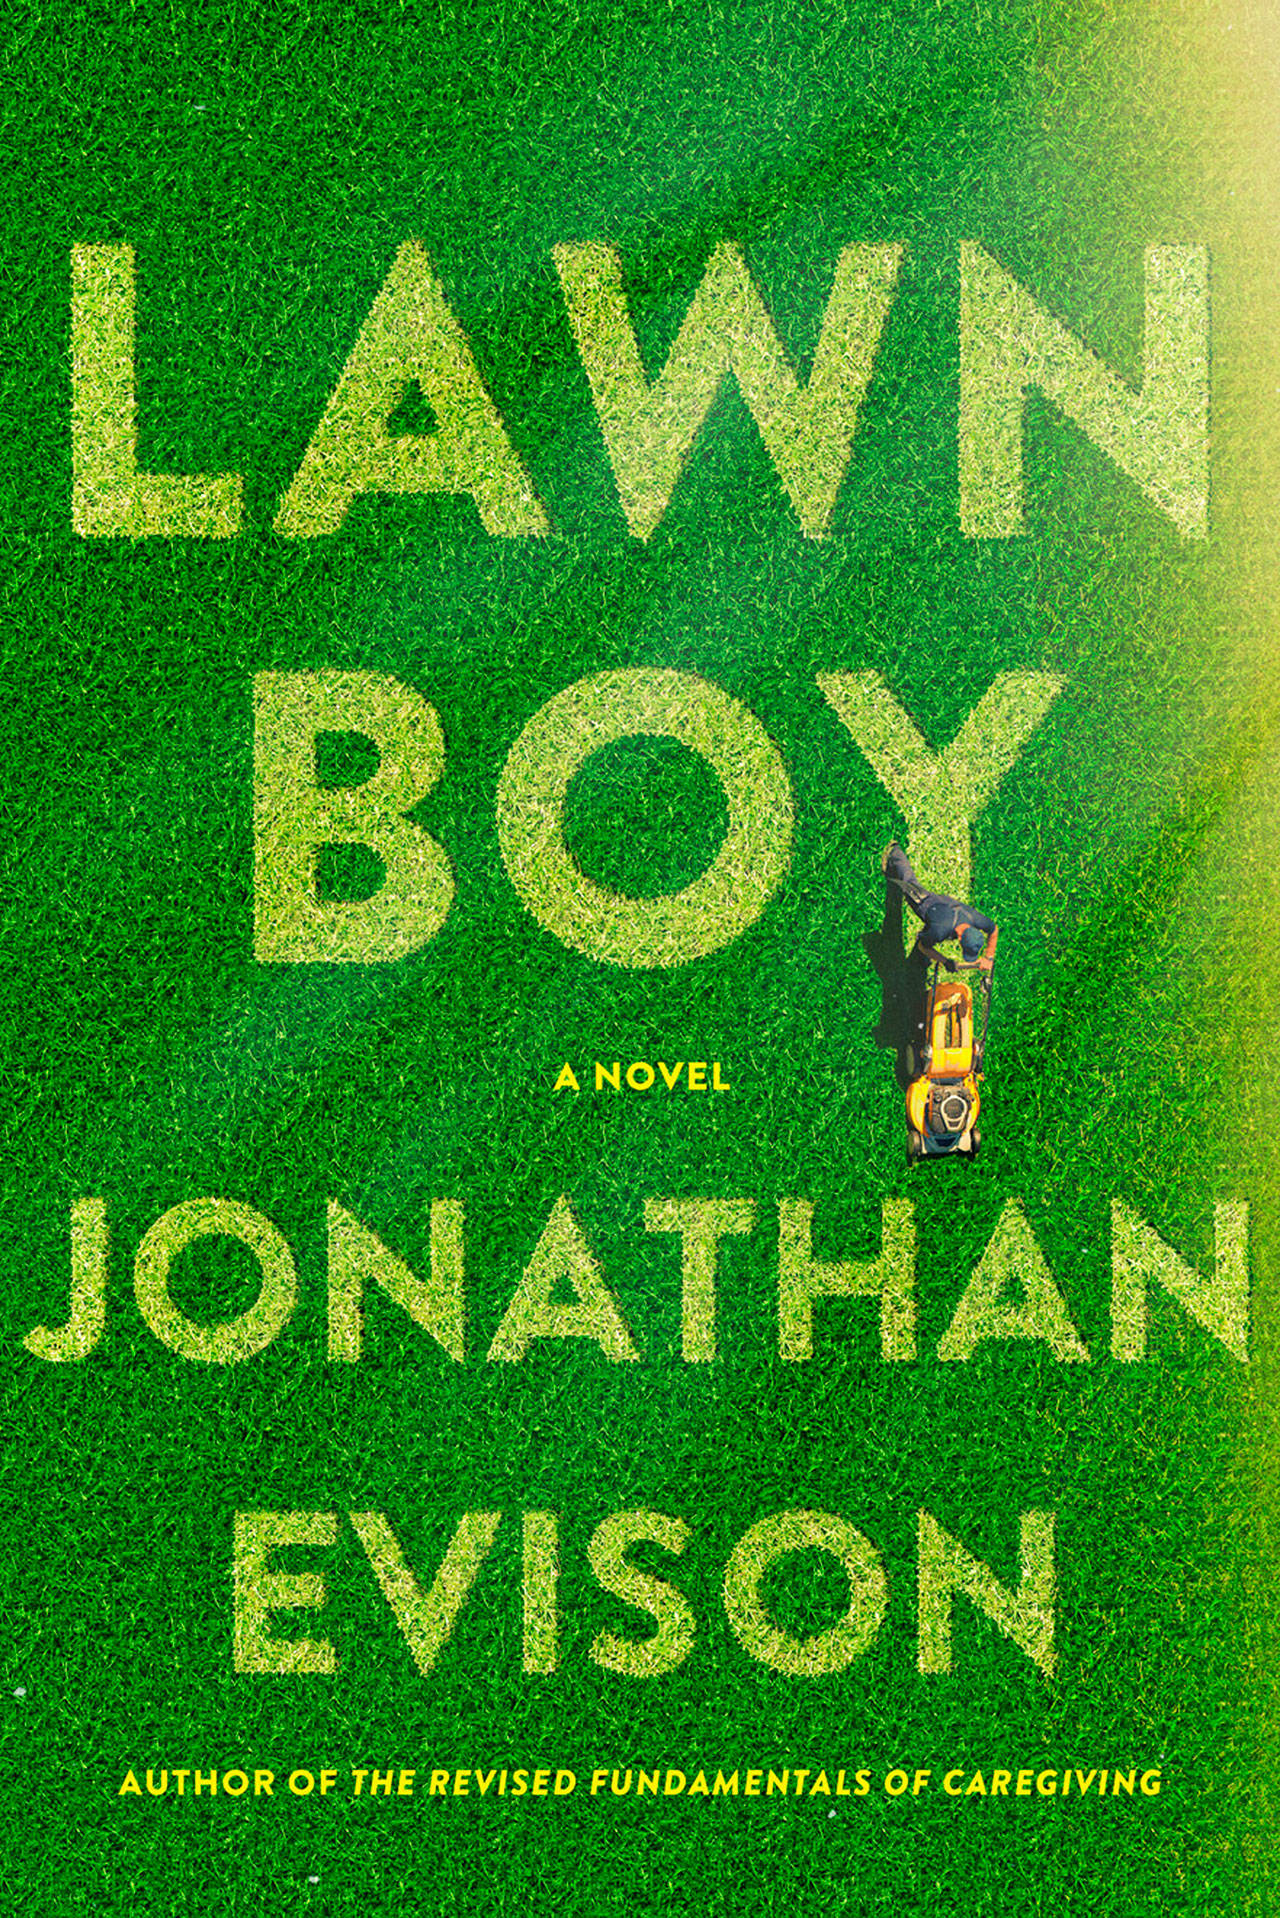 Image courtesy of Algonquin Books | “Lawn Boy,” the latest novel by Bainbridge scribe Jonathan Evison.